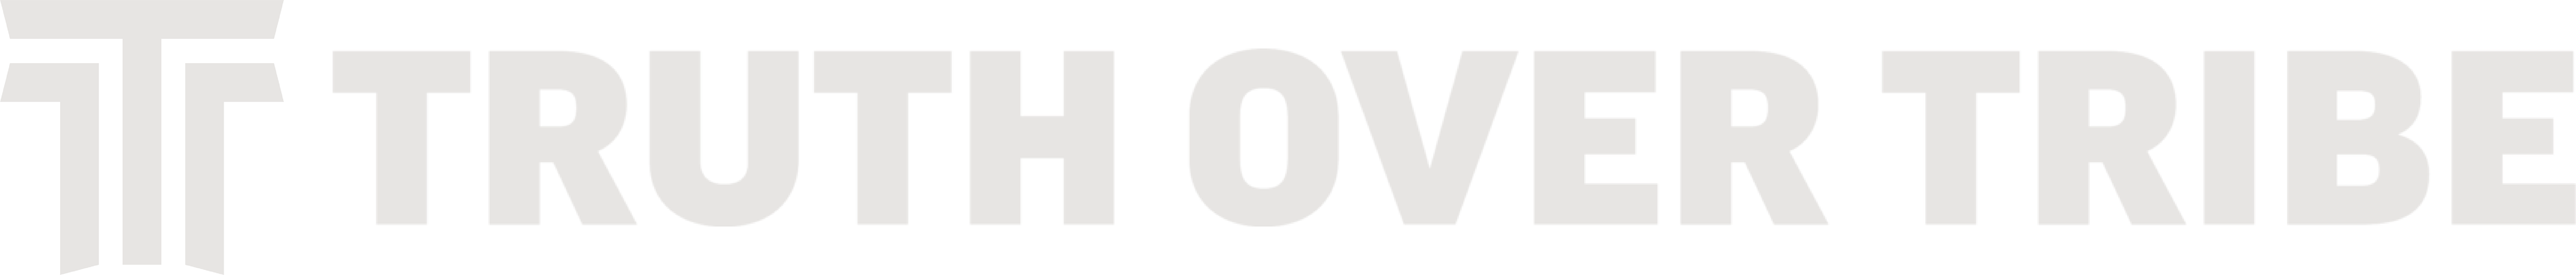 TOT logo icon and text horizontal light